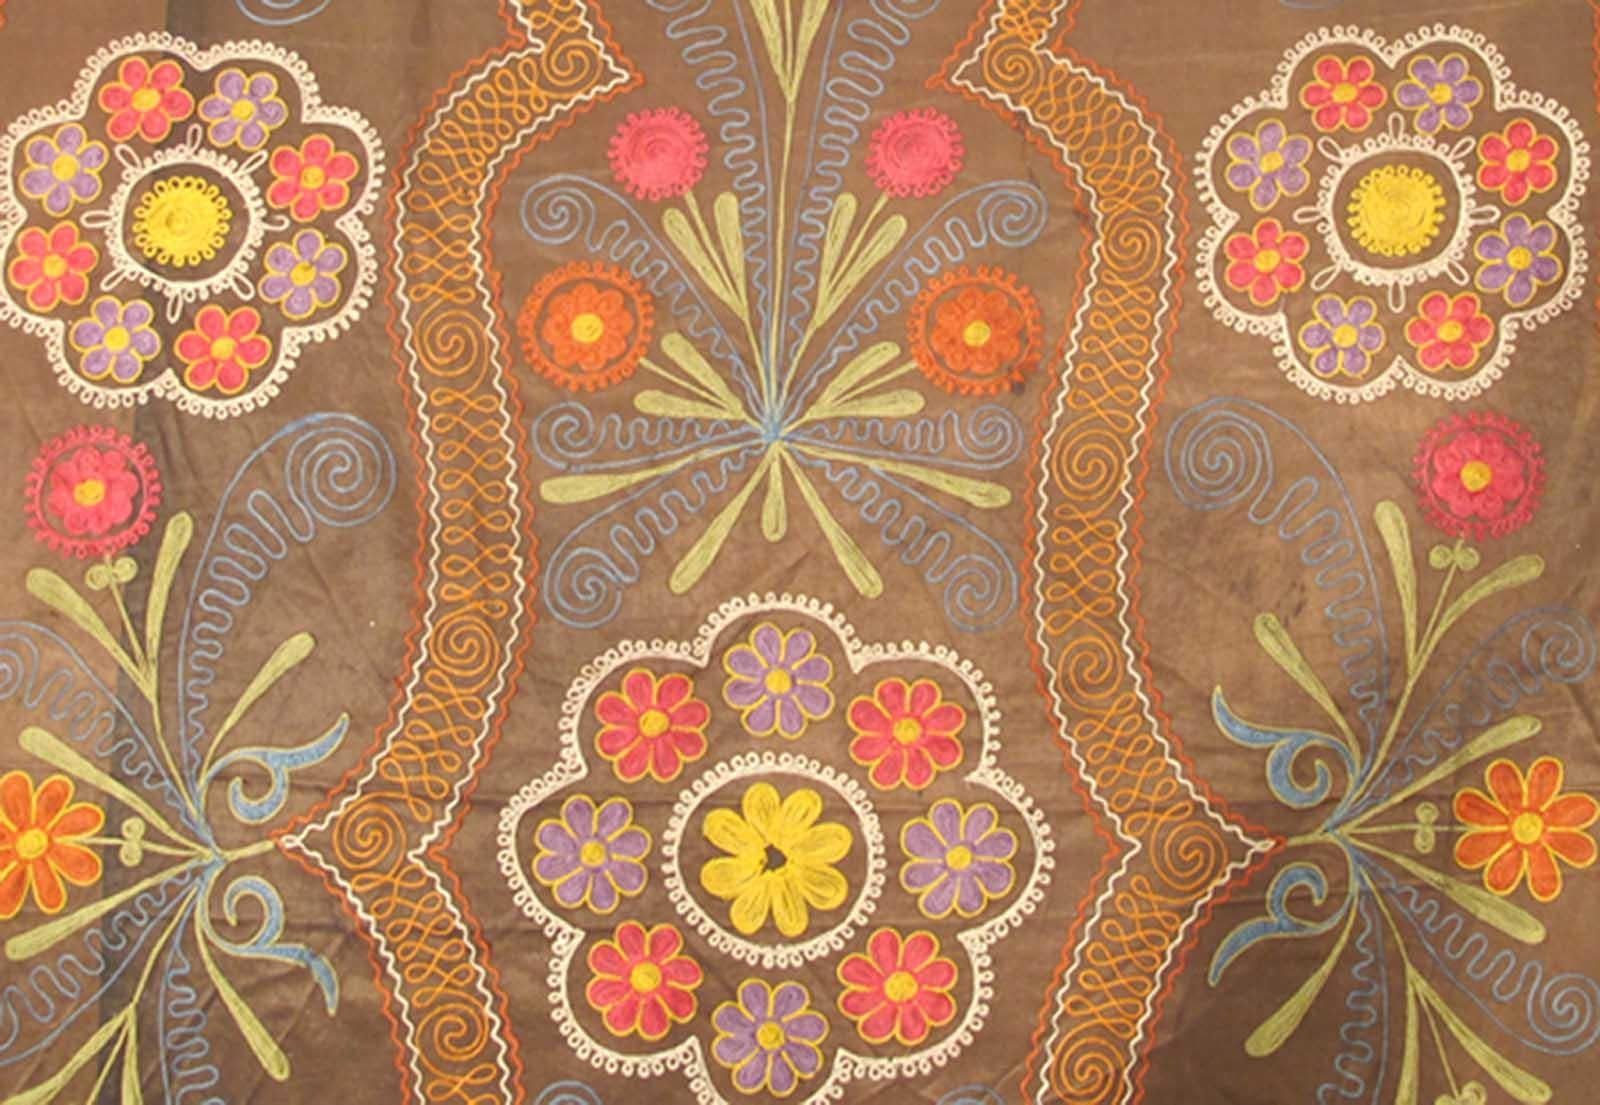 Uzbek Embroidery Suzani Vintage with Medallion Design